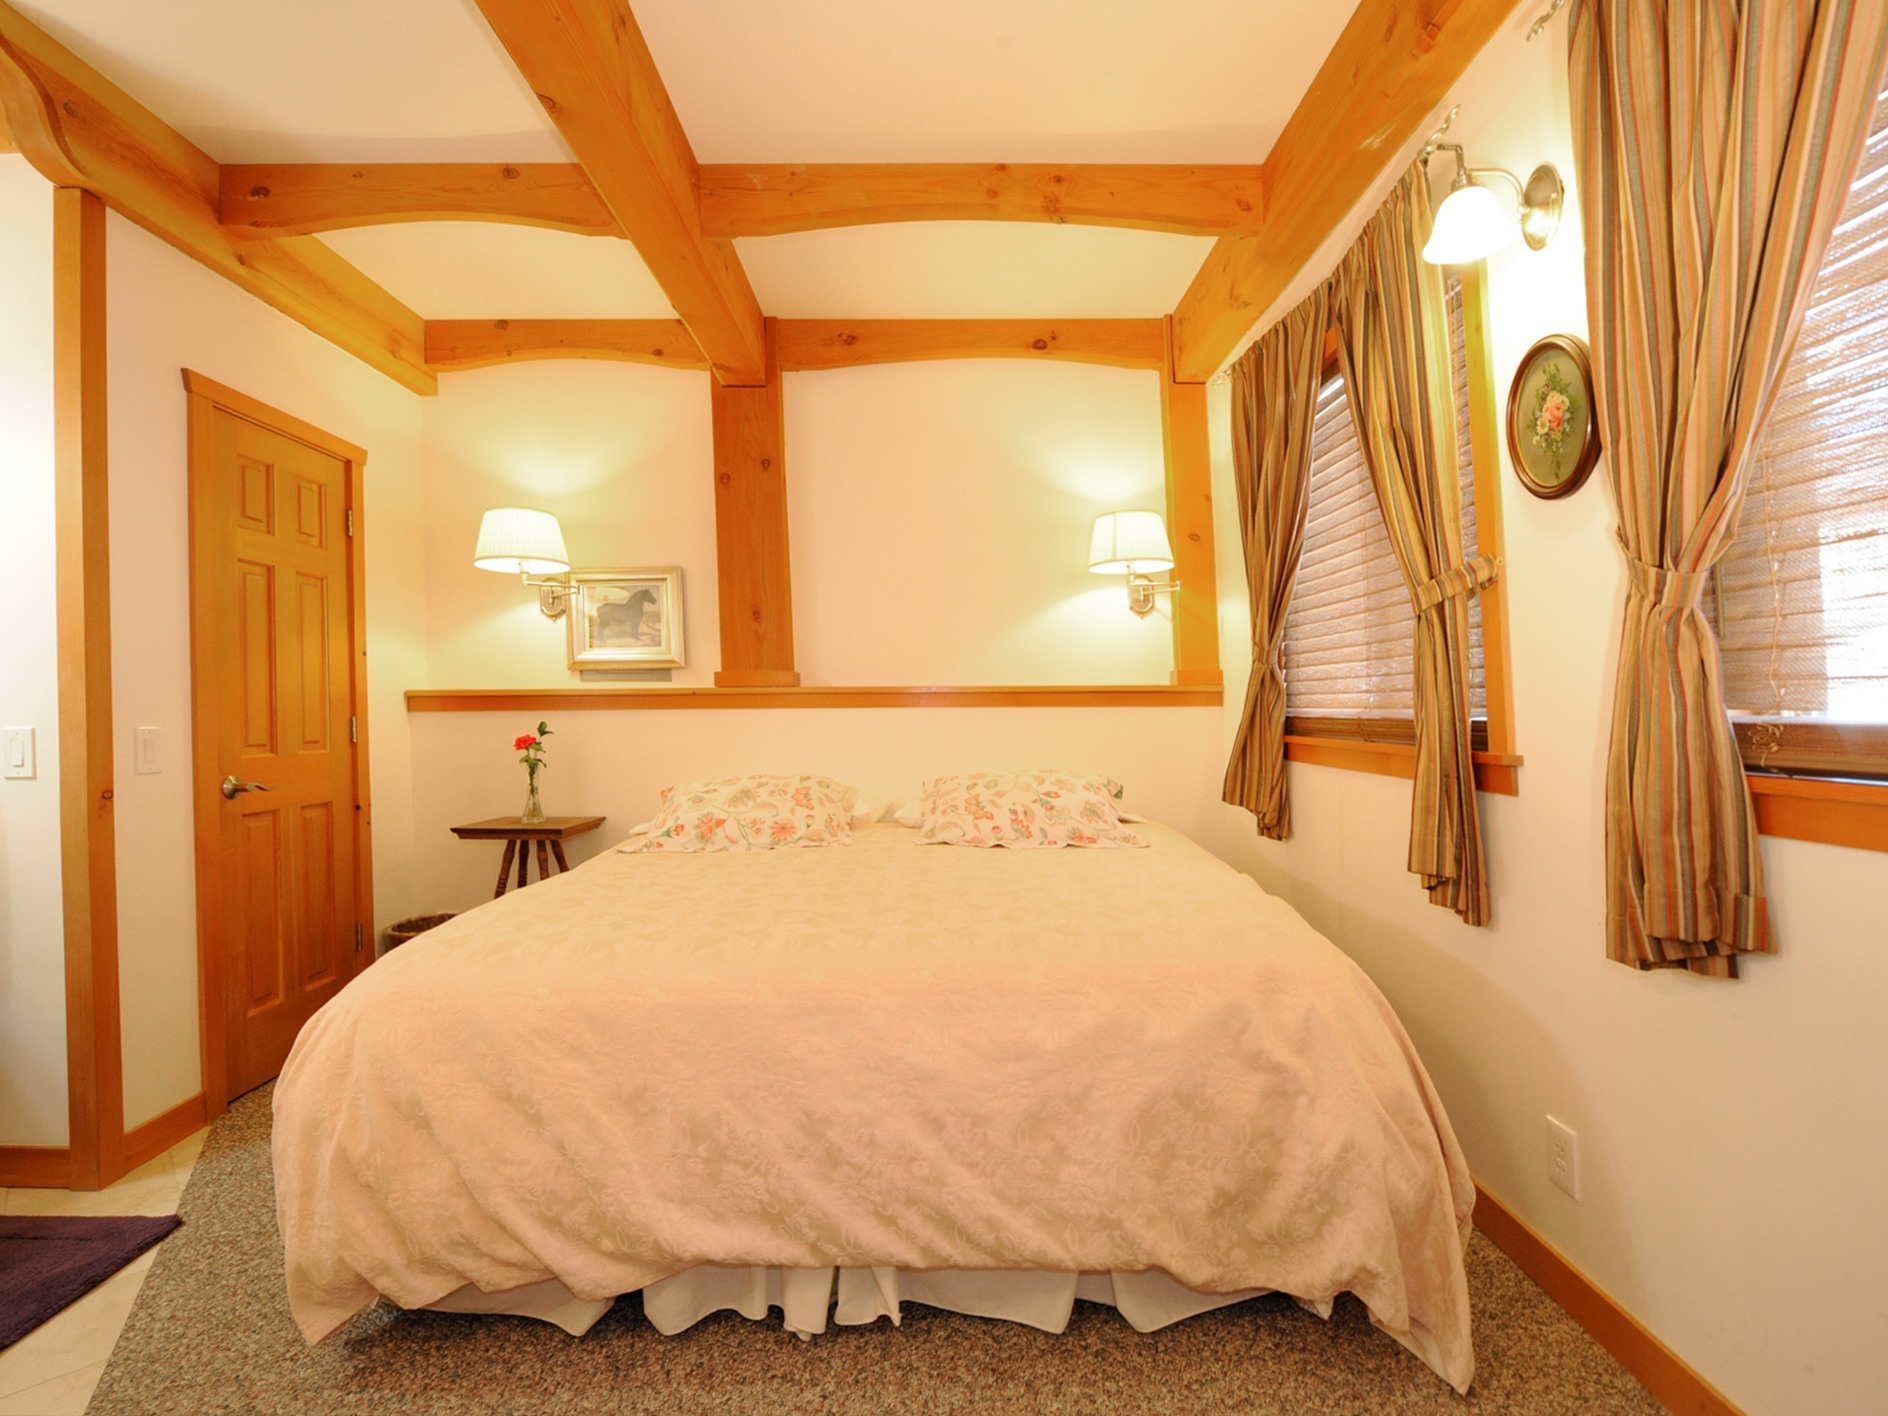 Surrey Room - King bed, private ensuite bath